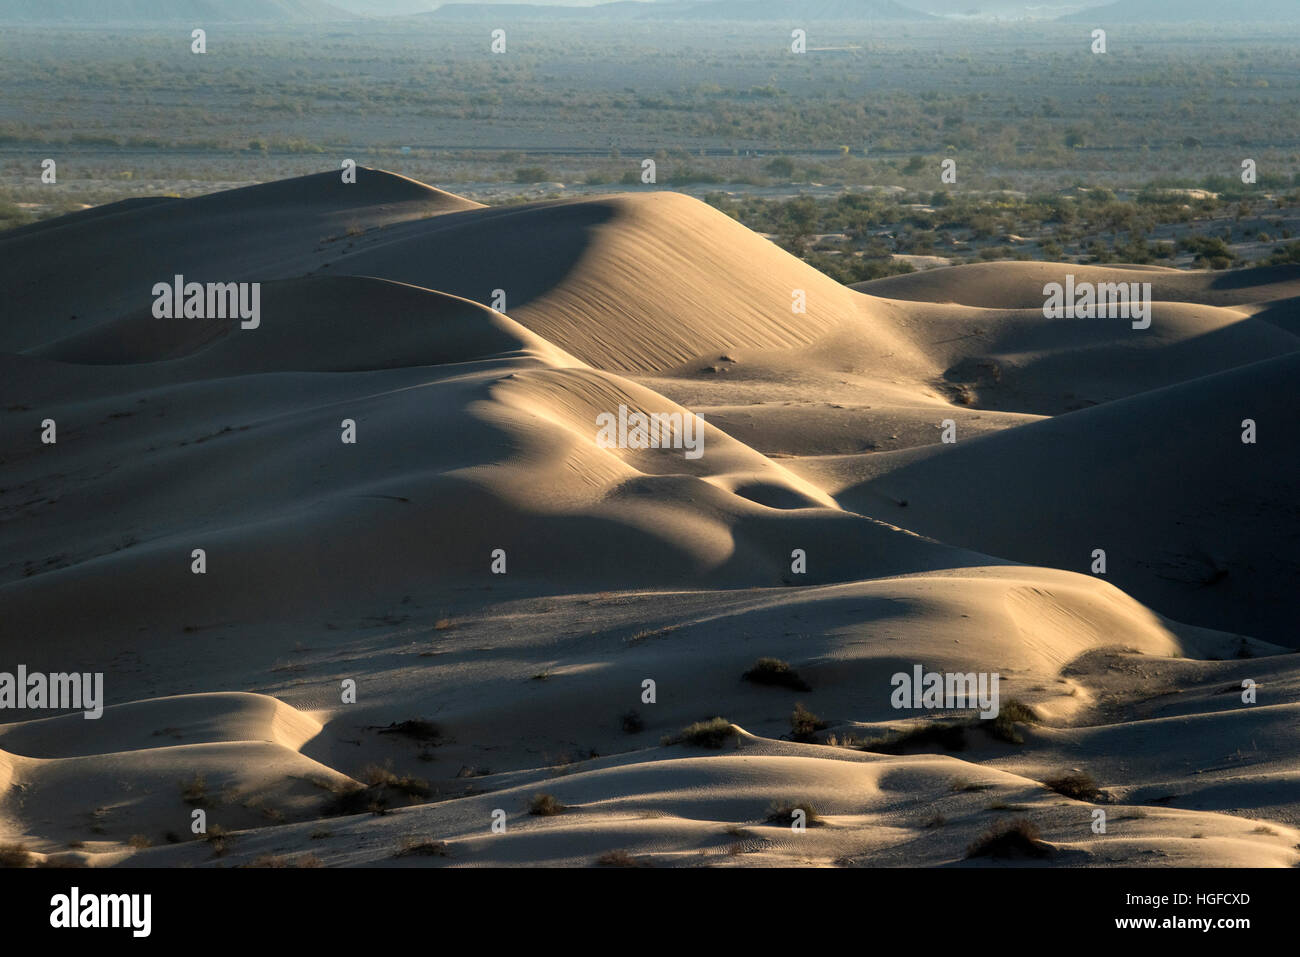 imperial, algodones, sand dunes, California Stock Photo